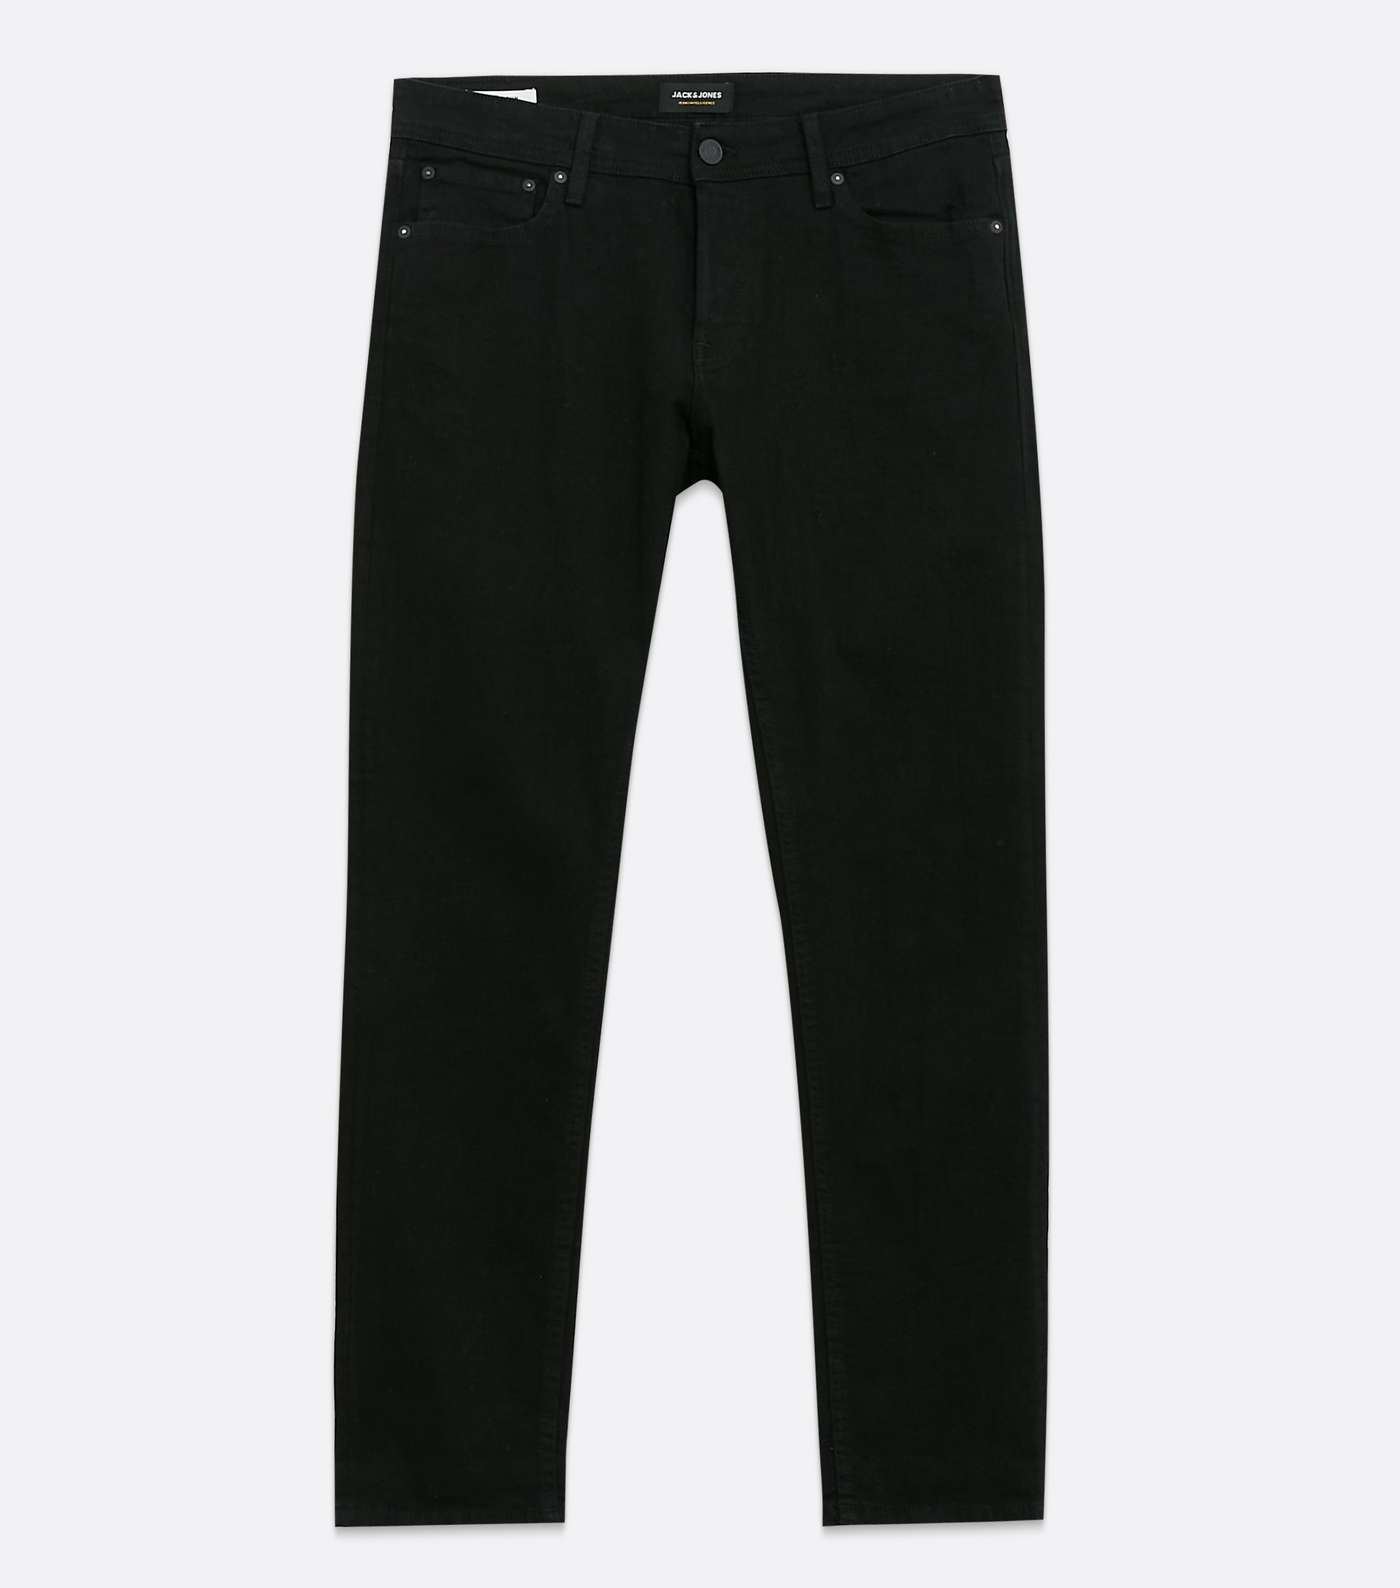 Jack & Jones Black Dark Wash Slim Fit Jeans Image 5